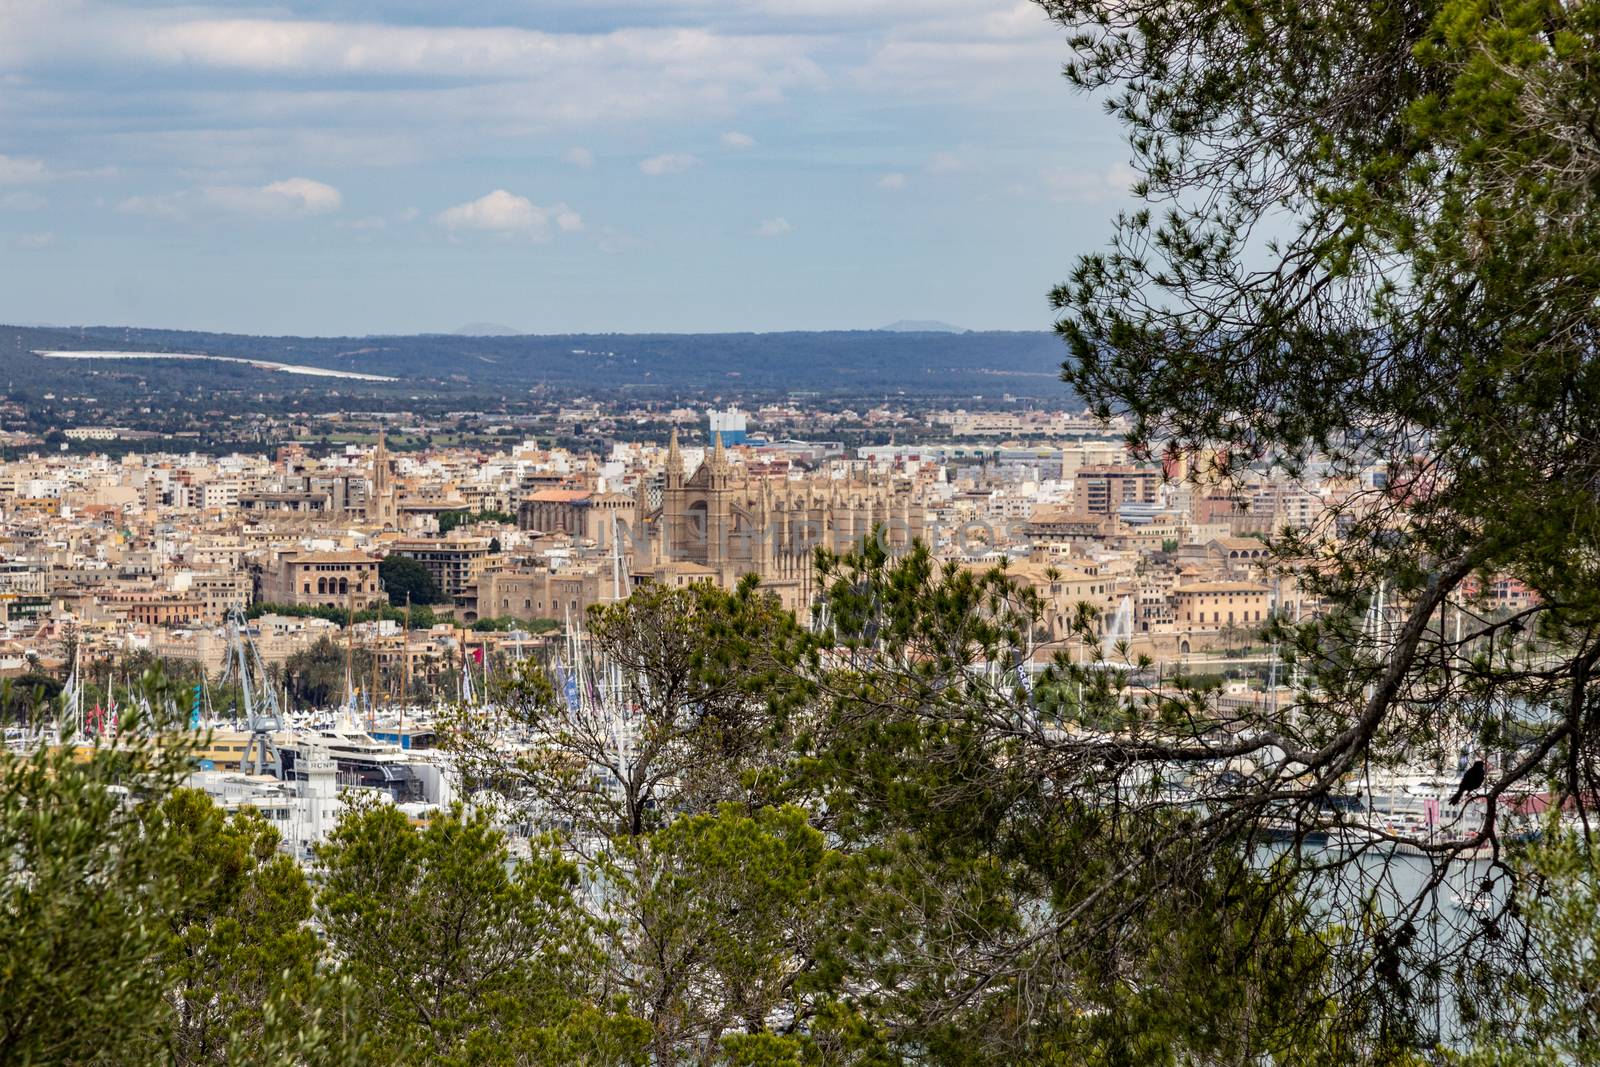 Scenic view at Palma de Mallorca, Spain by reinerc